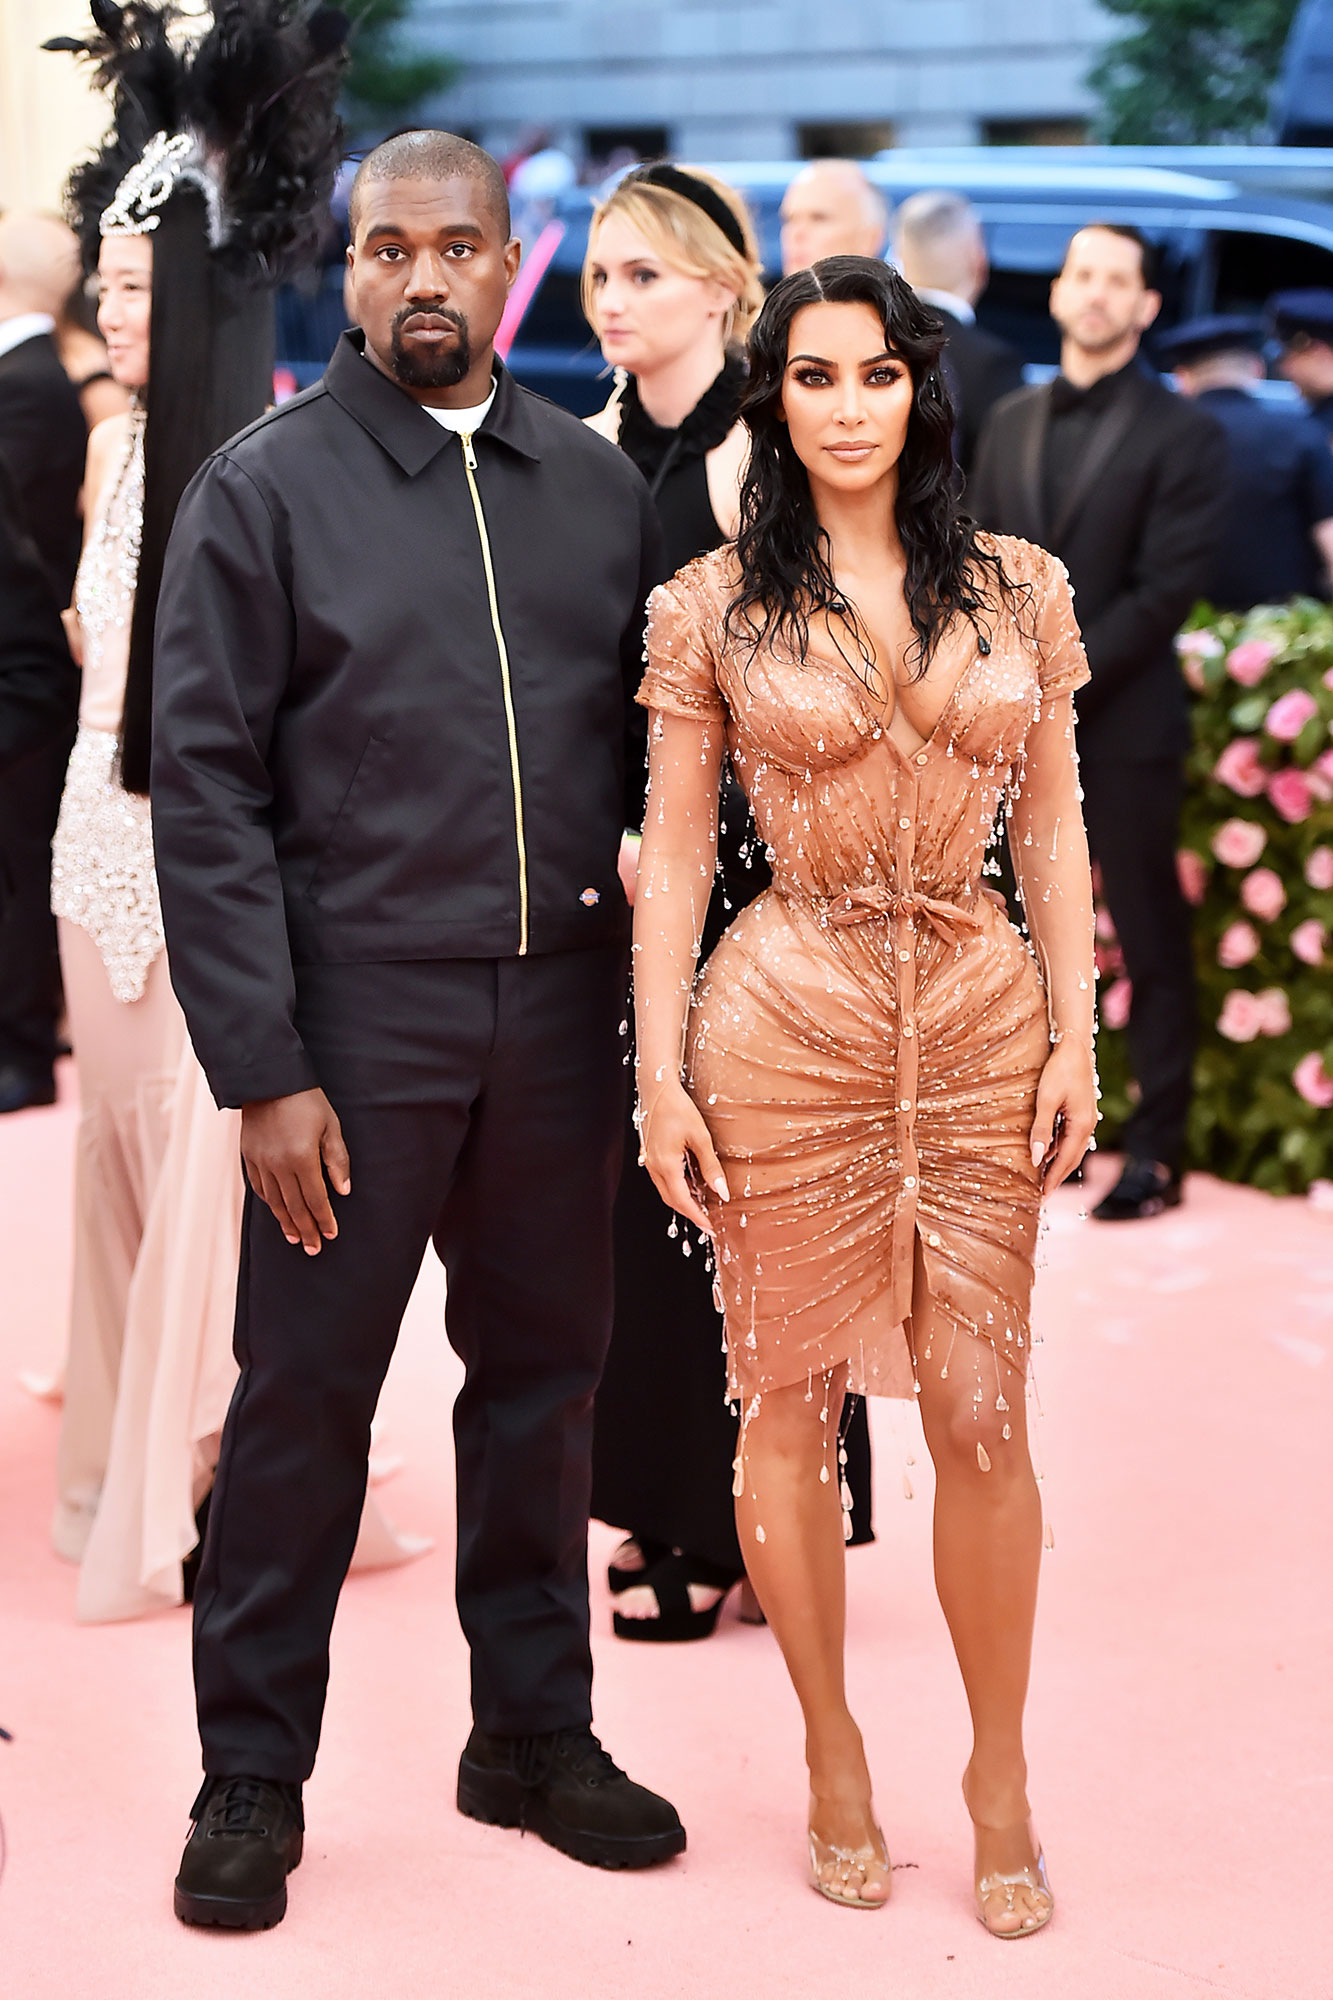 Kanye West and Kim Kardashian West met gala 2019 couples